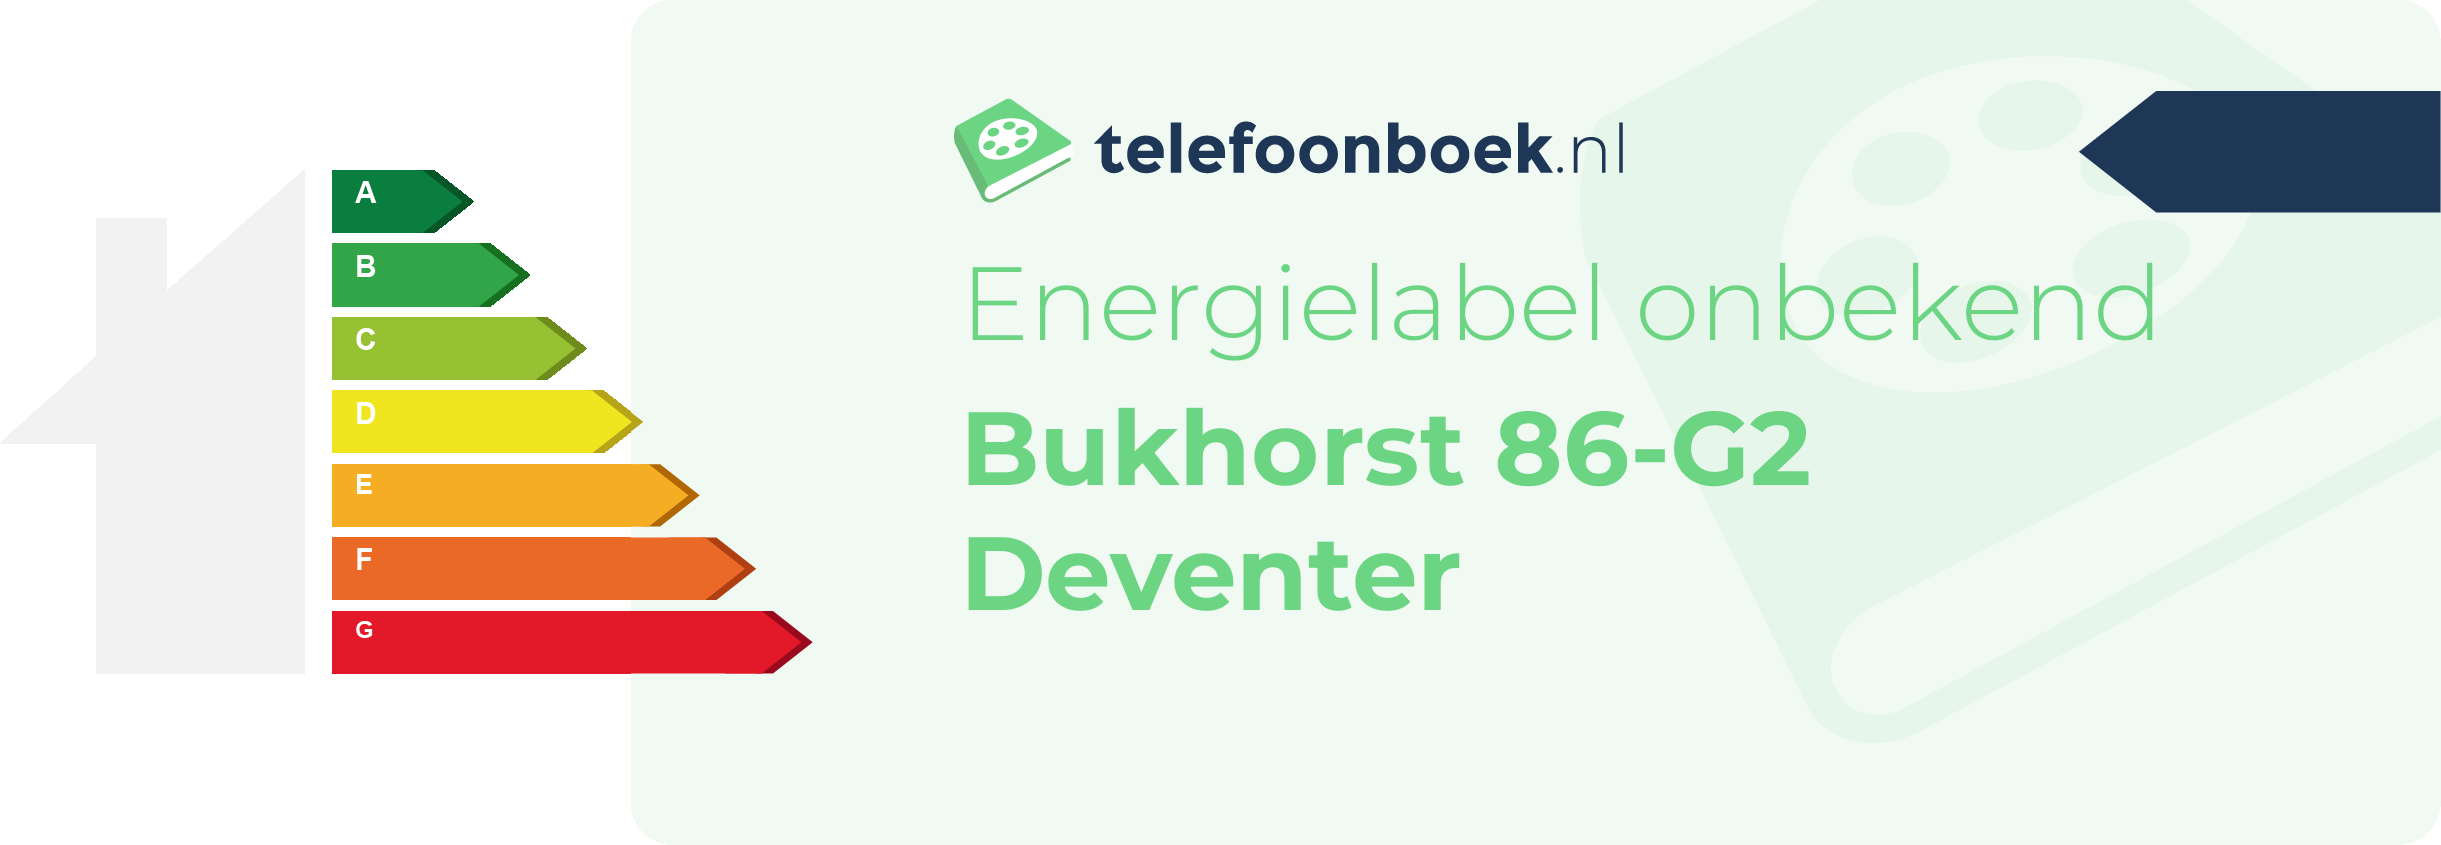 Energielabel Bukhorst 86-G2 Deventer